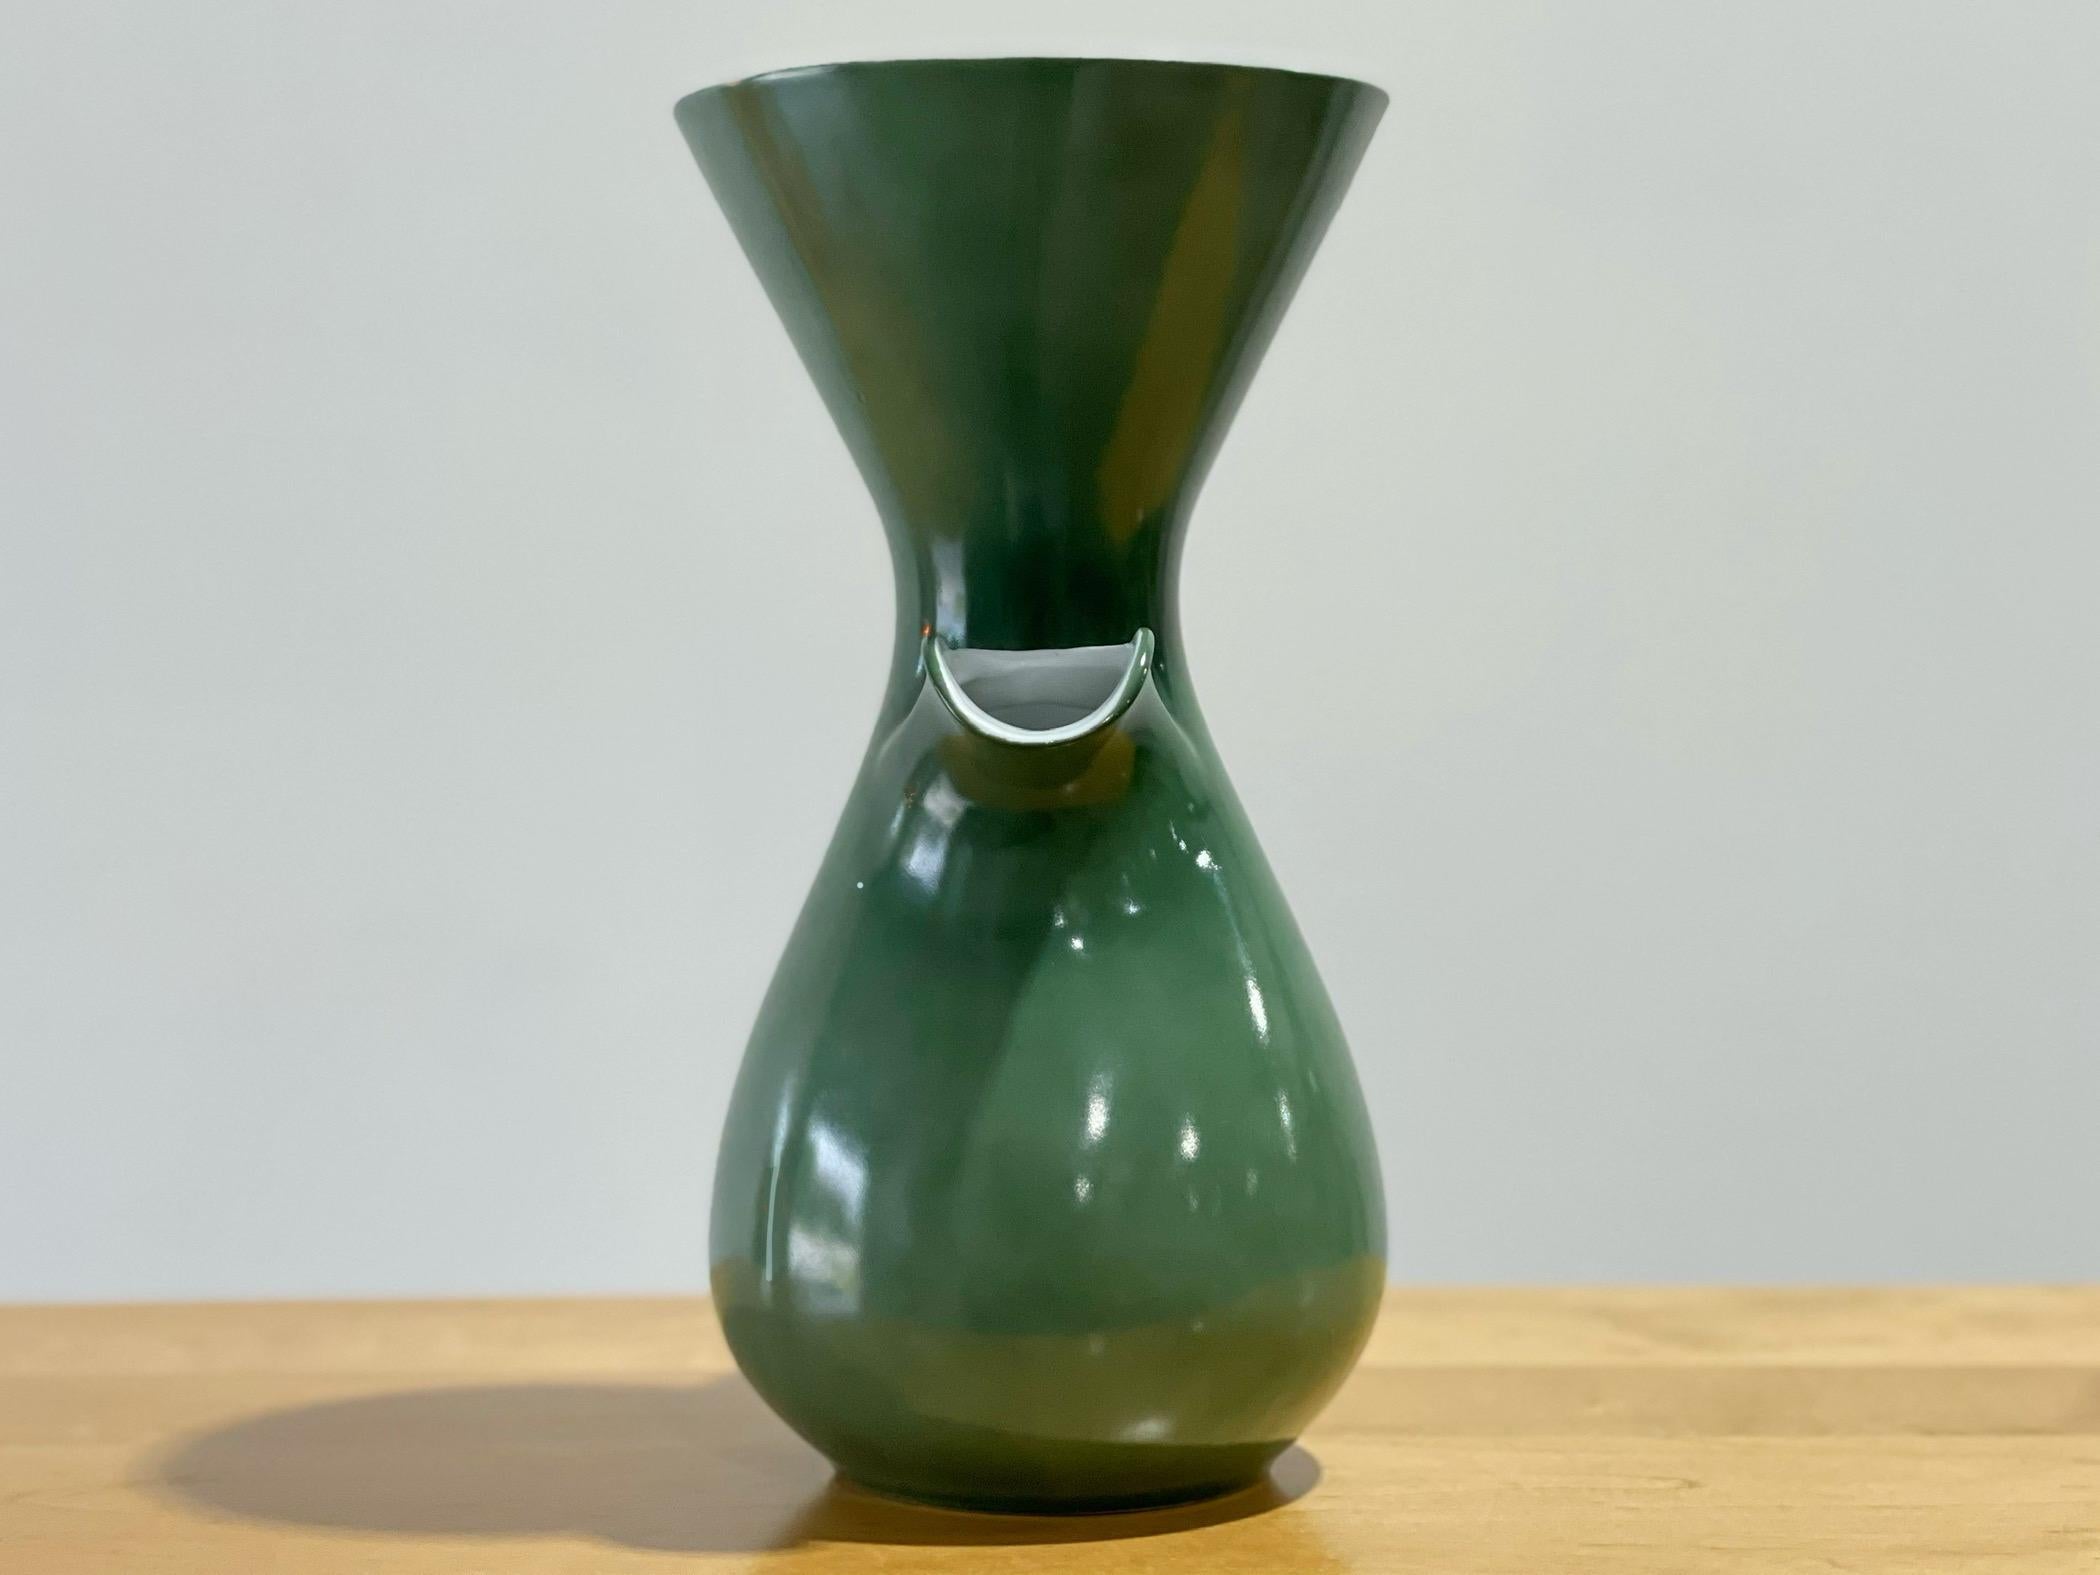 Ceramic Kenji Fujita for Freeman Lederman - Coffee Carafe, Creamer, Sugar Dish